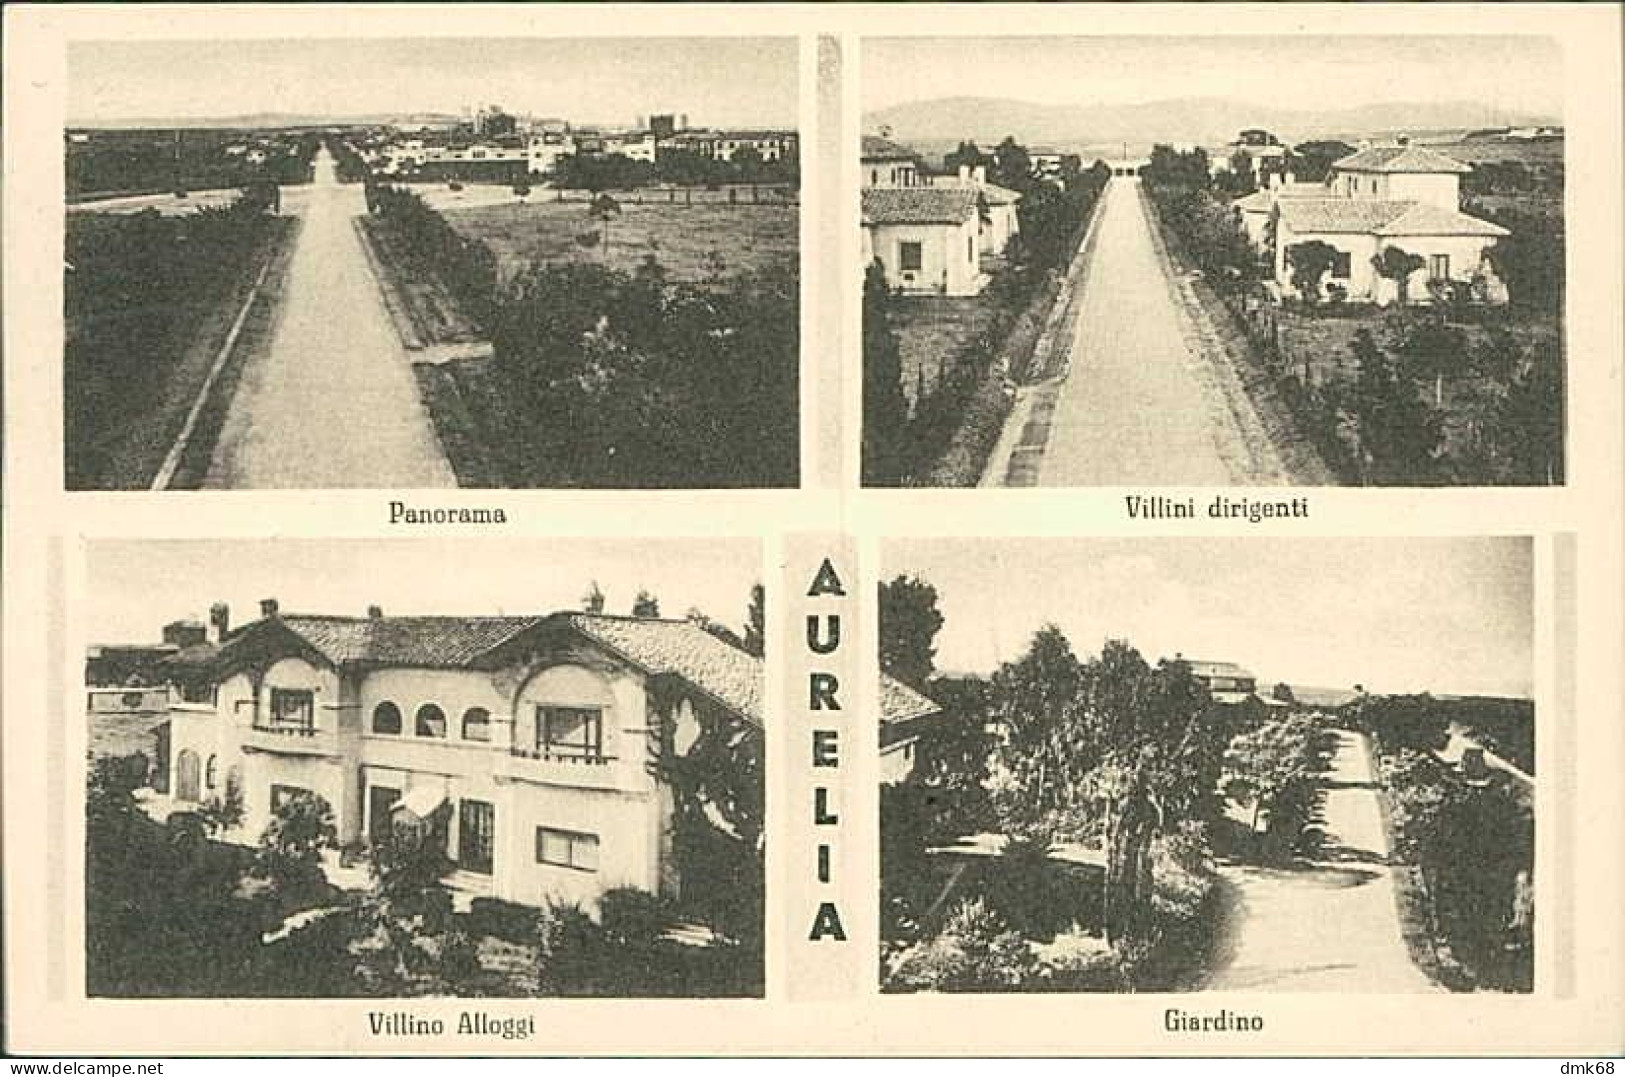 AURELIA ( CIVITAVECCHIA ) VEDUTINE - PANORAMA / VILLINI DIRIGENTI / VILLINO ALLOGGI / GIARDINO  - 1930s ( 19524) - Civitavecchia